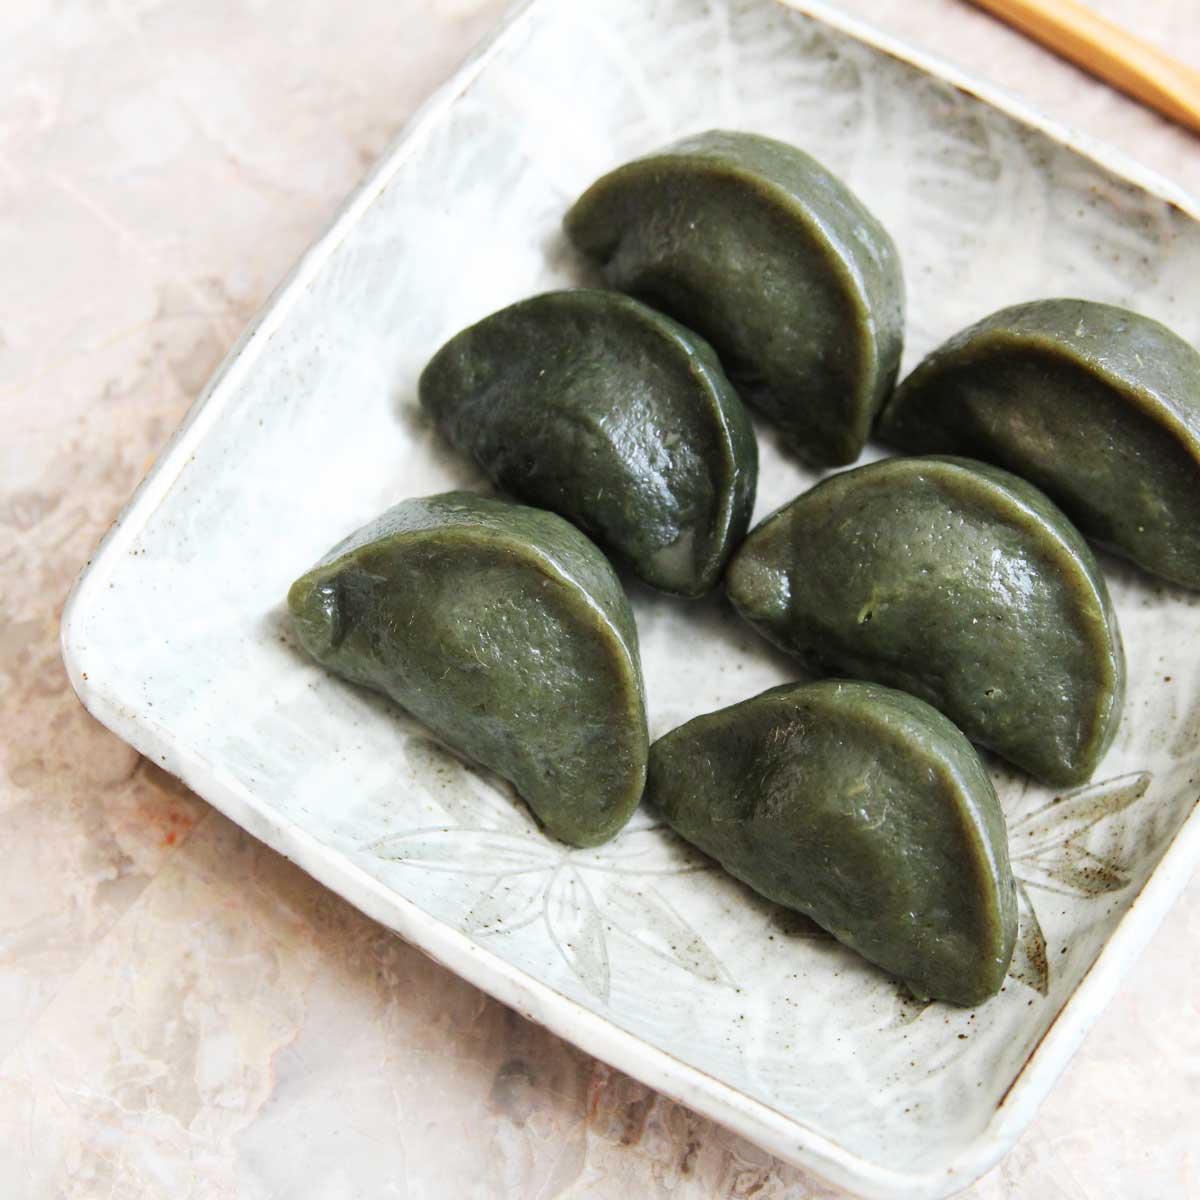 Healthier Mugwort Songpyeon made with Sweet Potatoes (고구마 쑥송편) - mooncakes